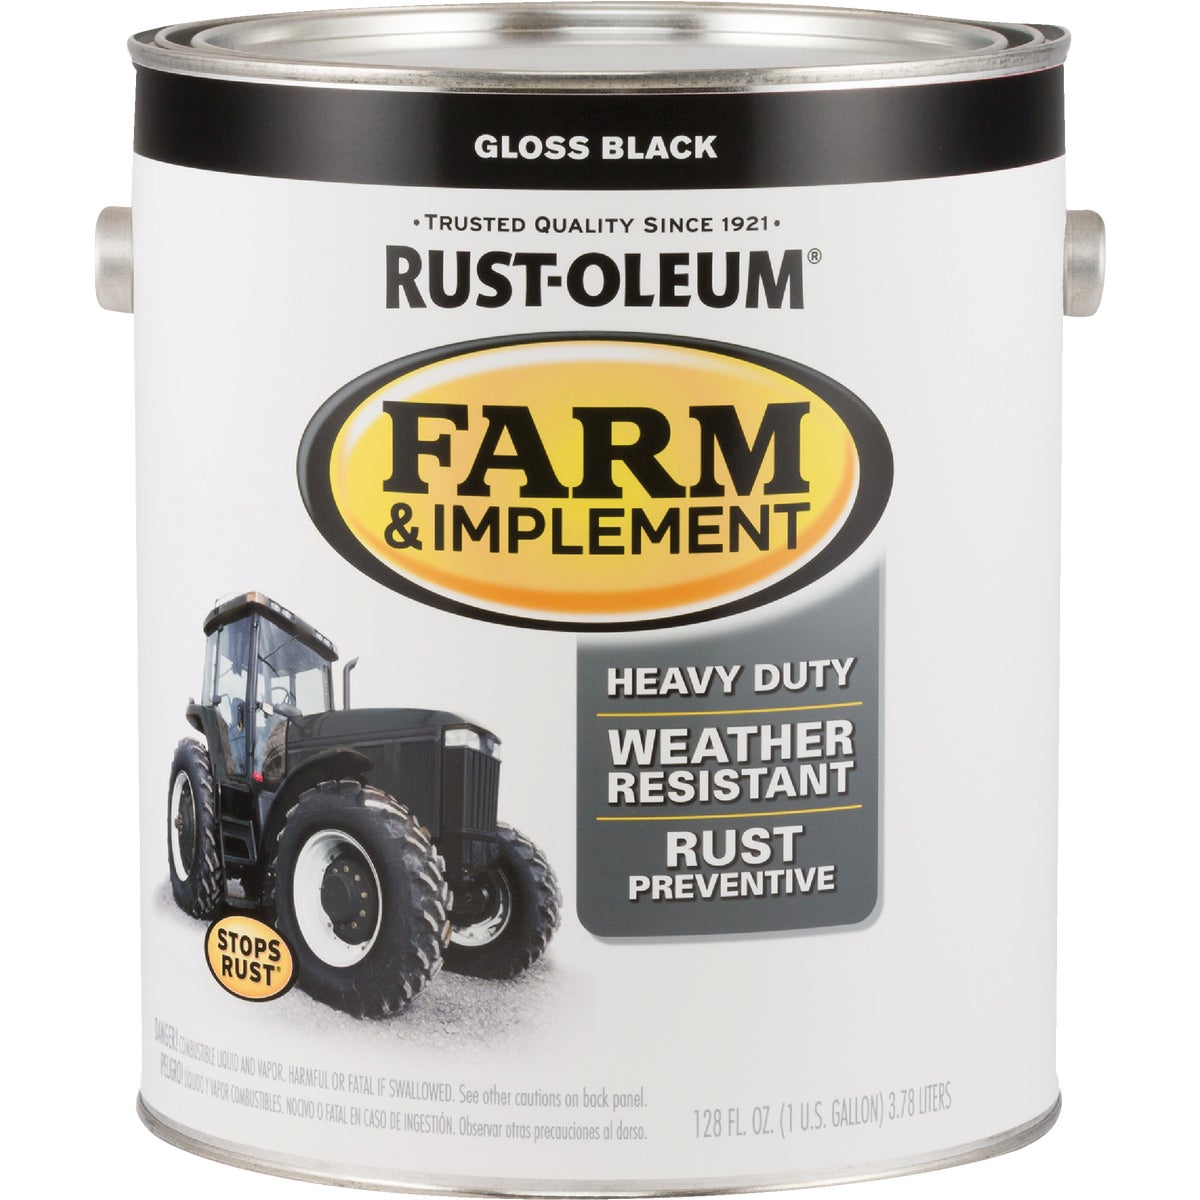 Rust-Oleum 1 Gallon Black Gloss Farm & Implement Enamel